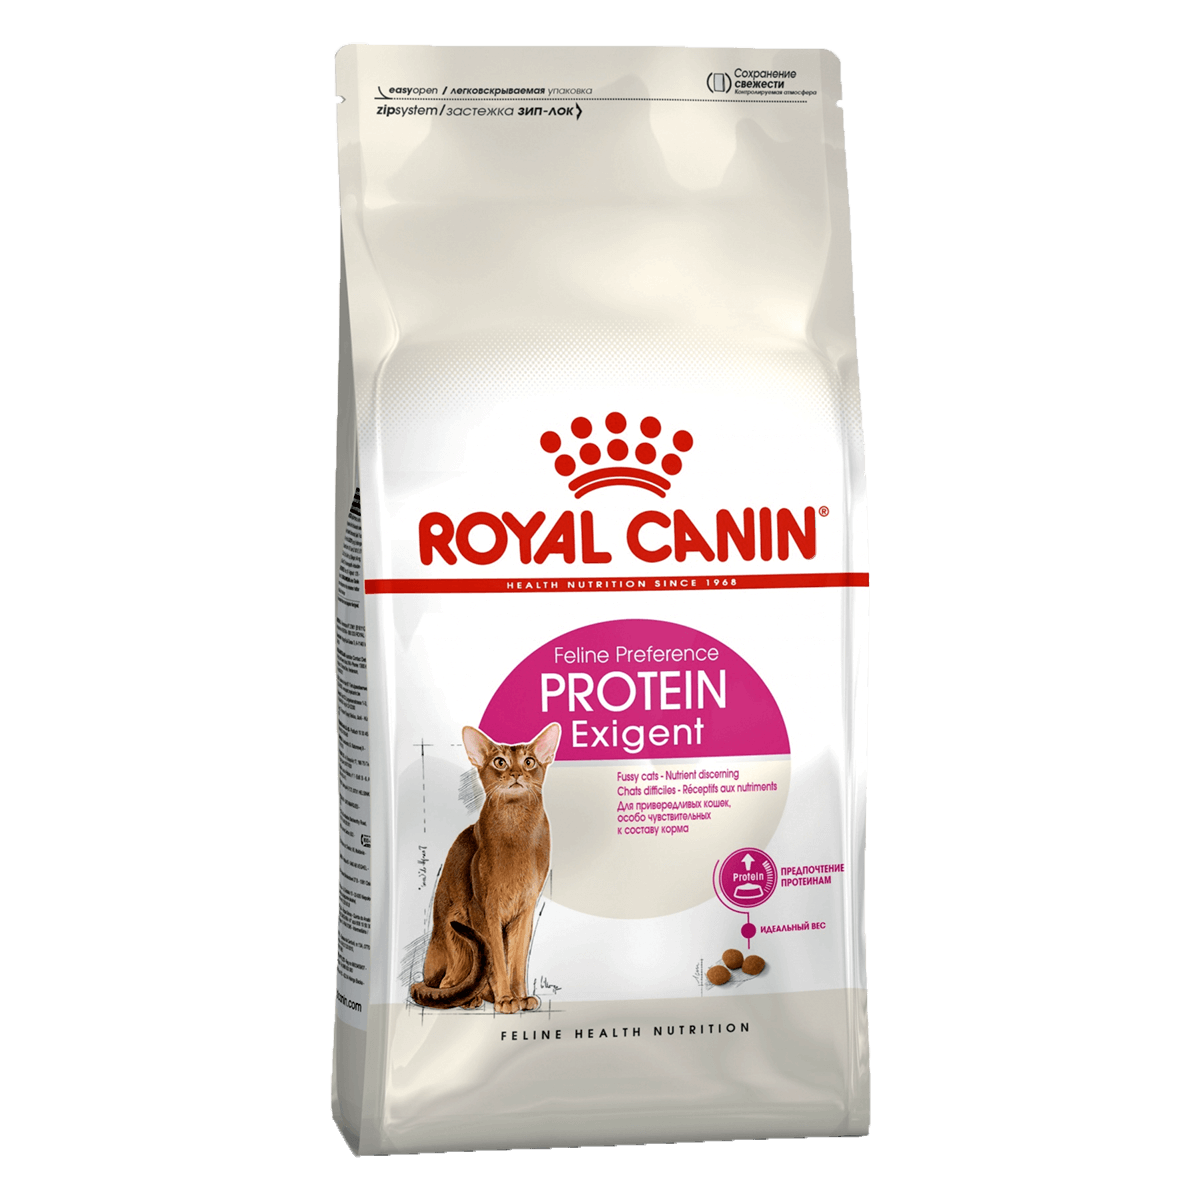 Royal Canin Exigent Protein Preference, 2 кг - корм Роял Канин для привередливых кошек